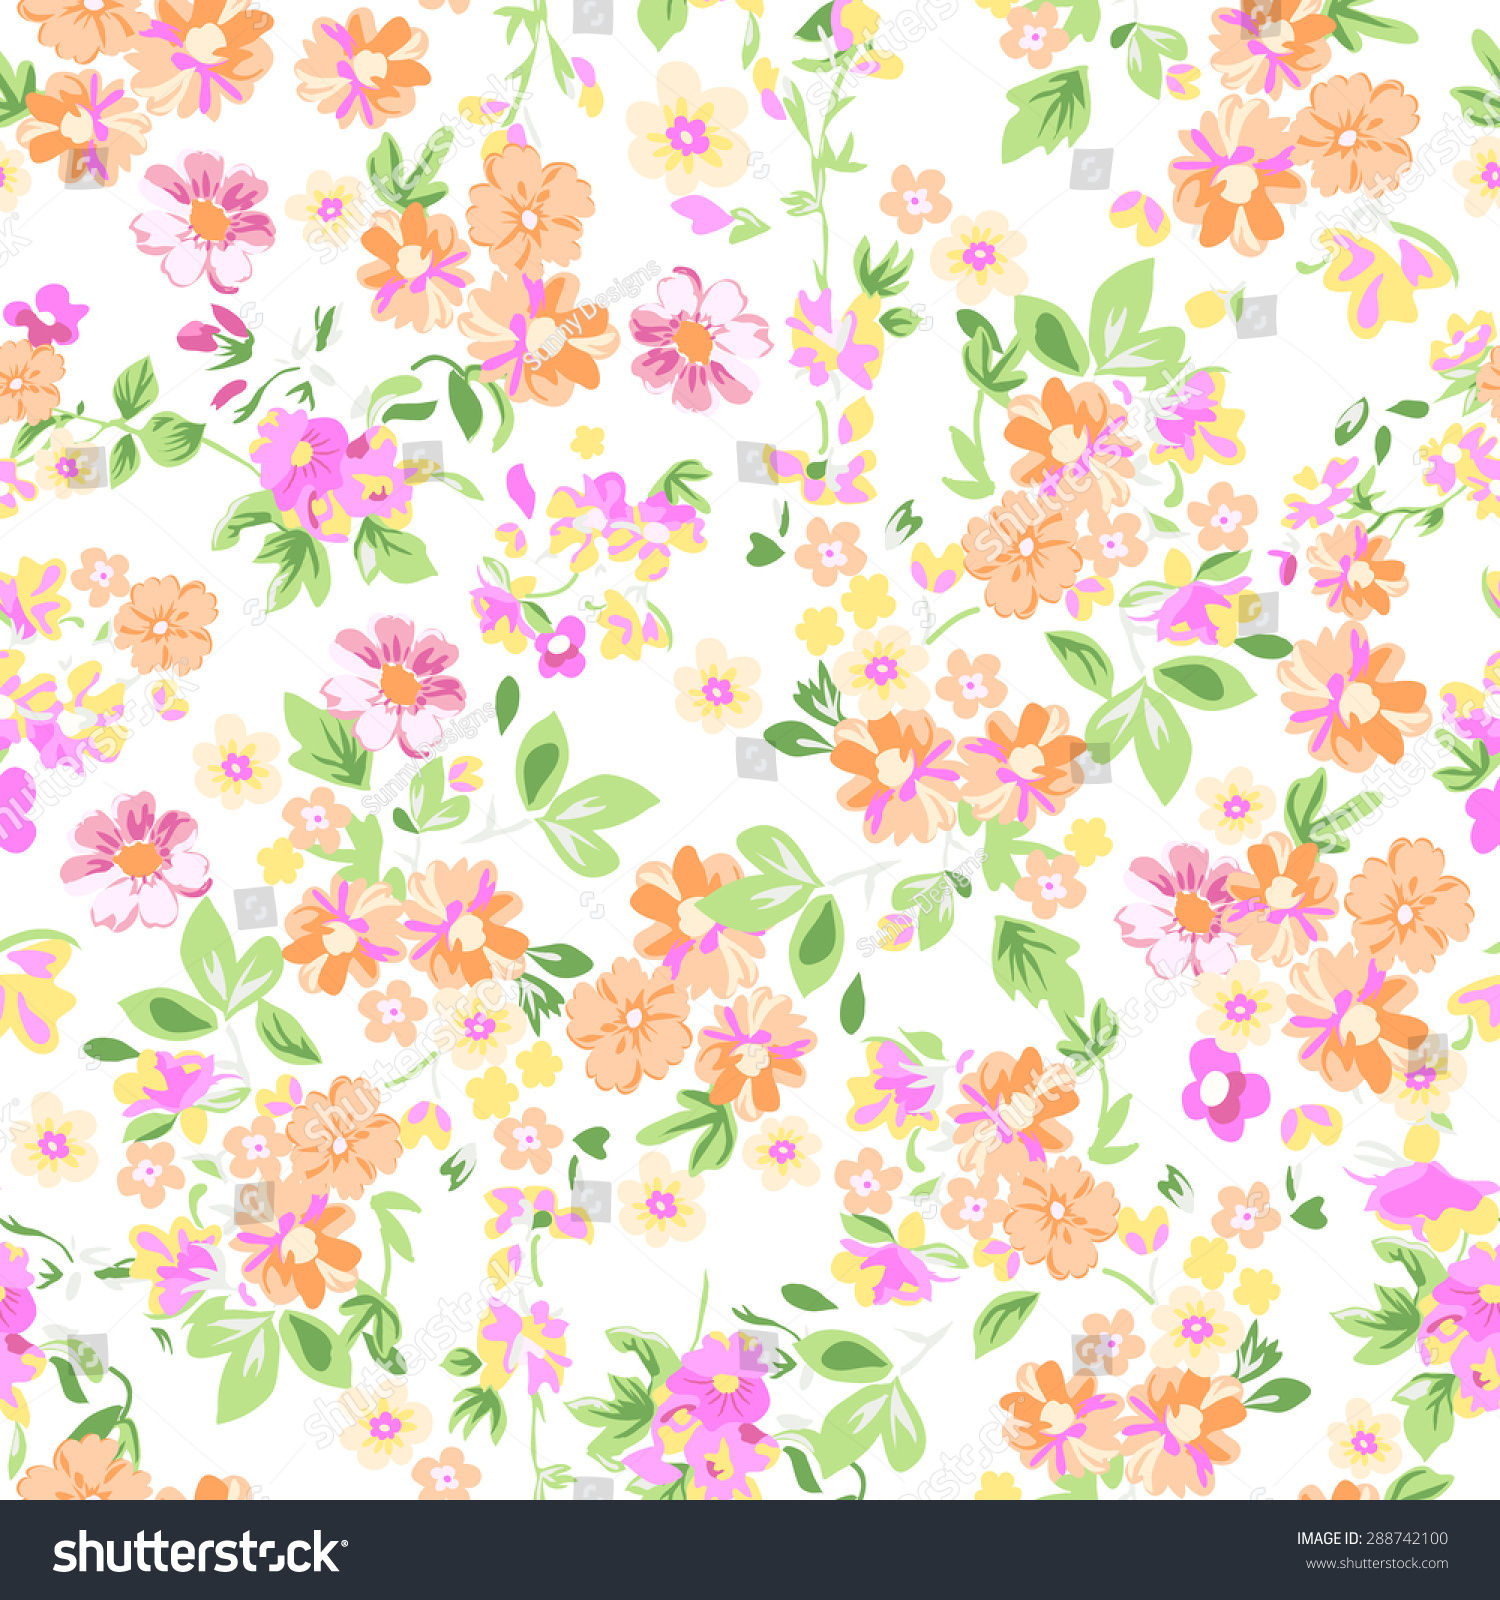 Floral Print Background Image